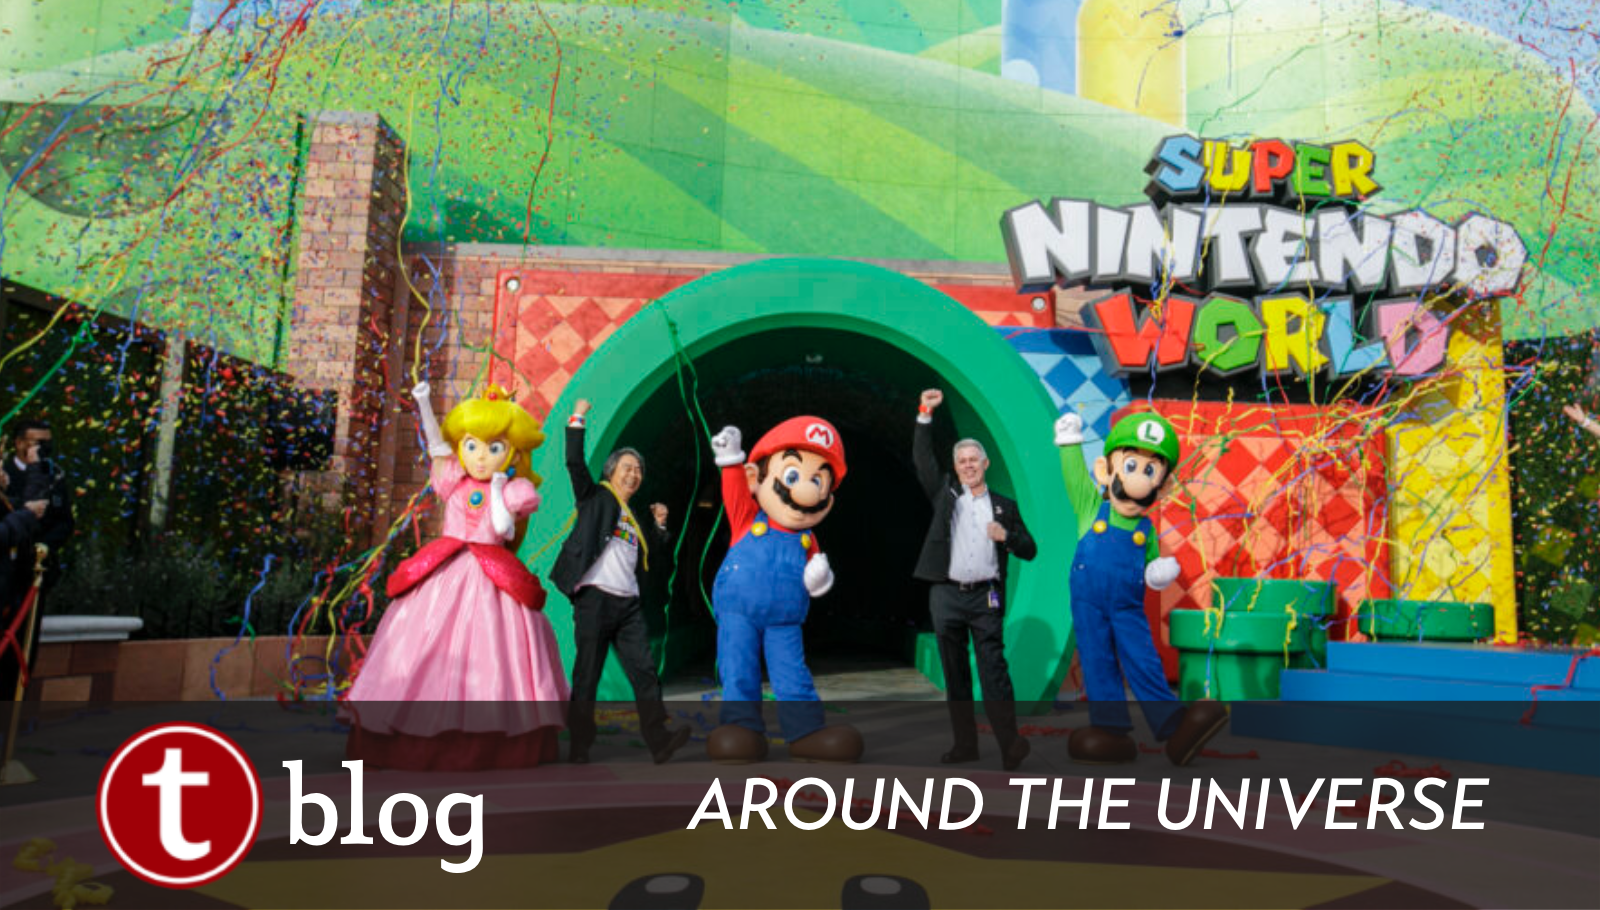 Take a tour around Super Nintendo World with Shigeru Miyamoto - Vooks